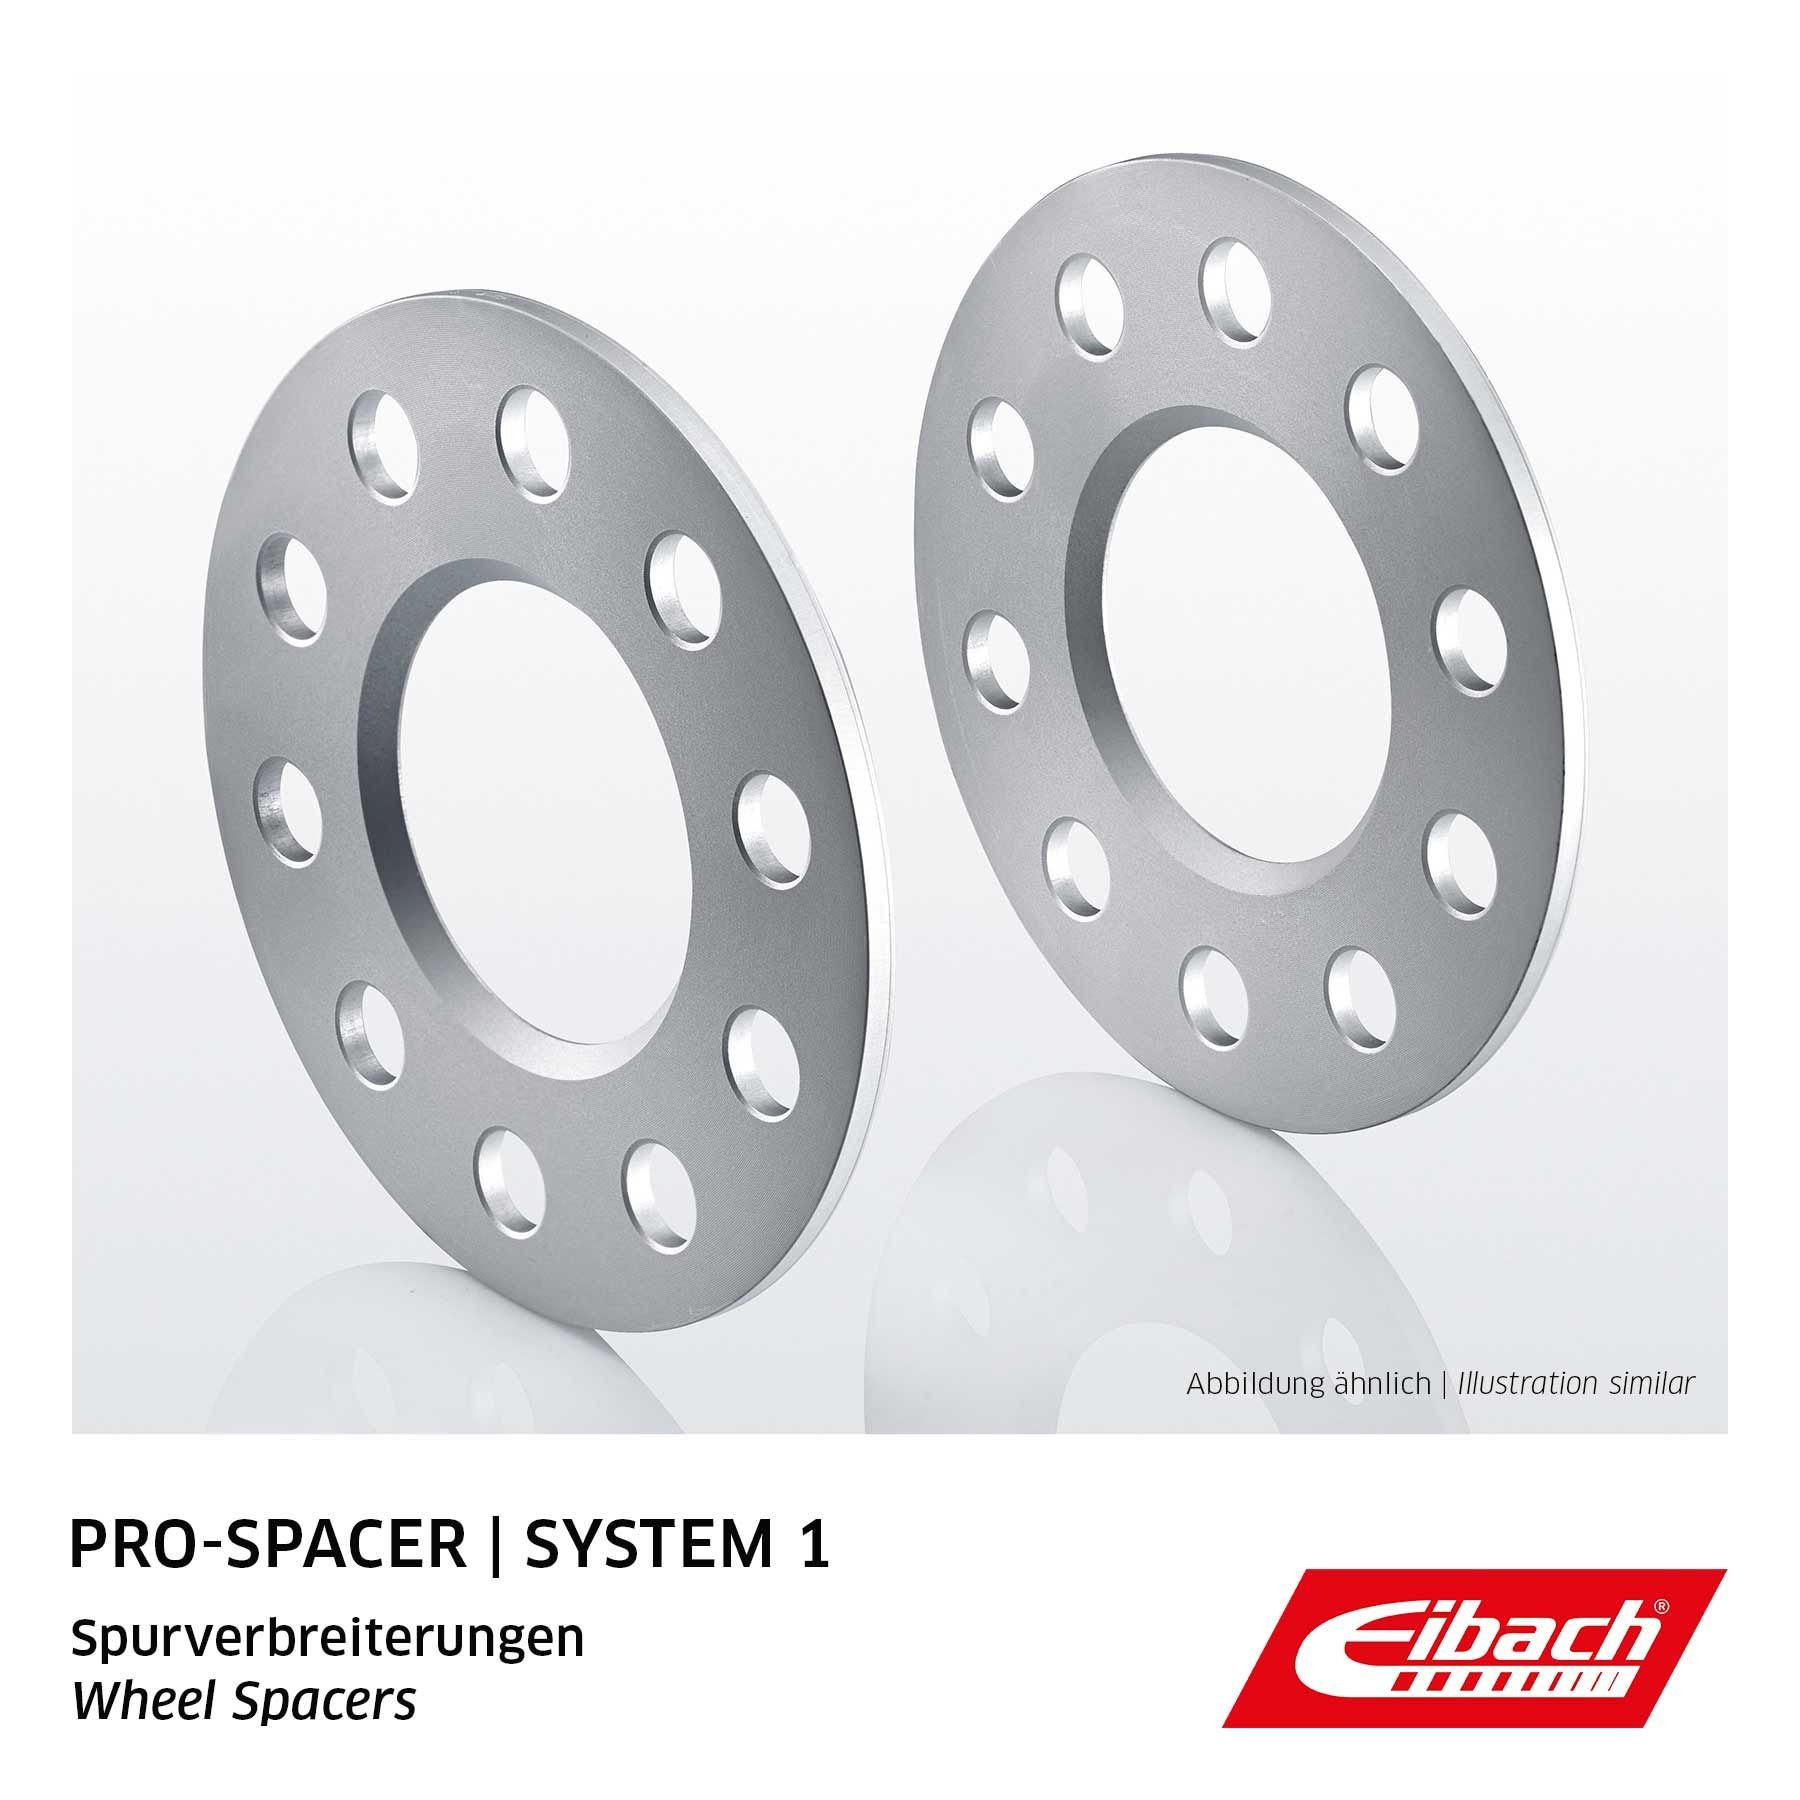 OEM-quality EIBACH S90-1-08-001 Hub centric wheel spacers